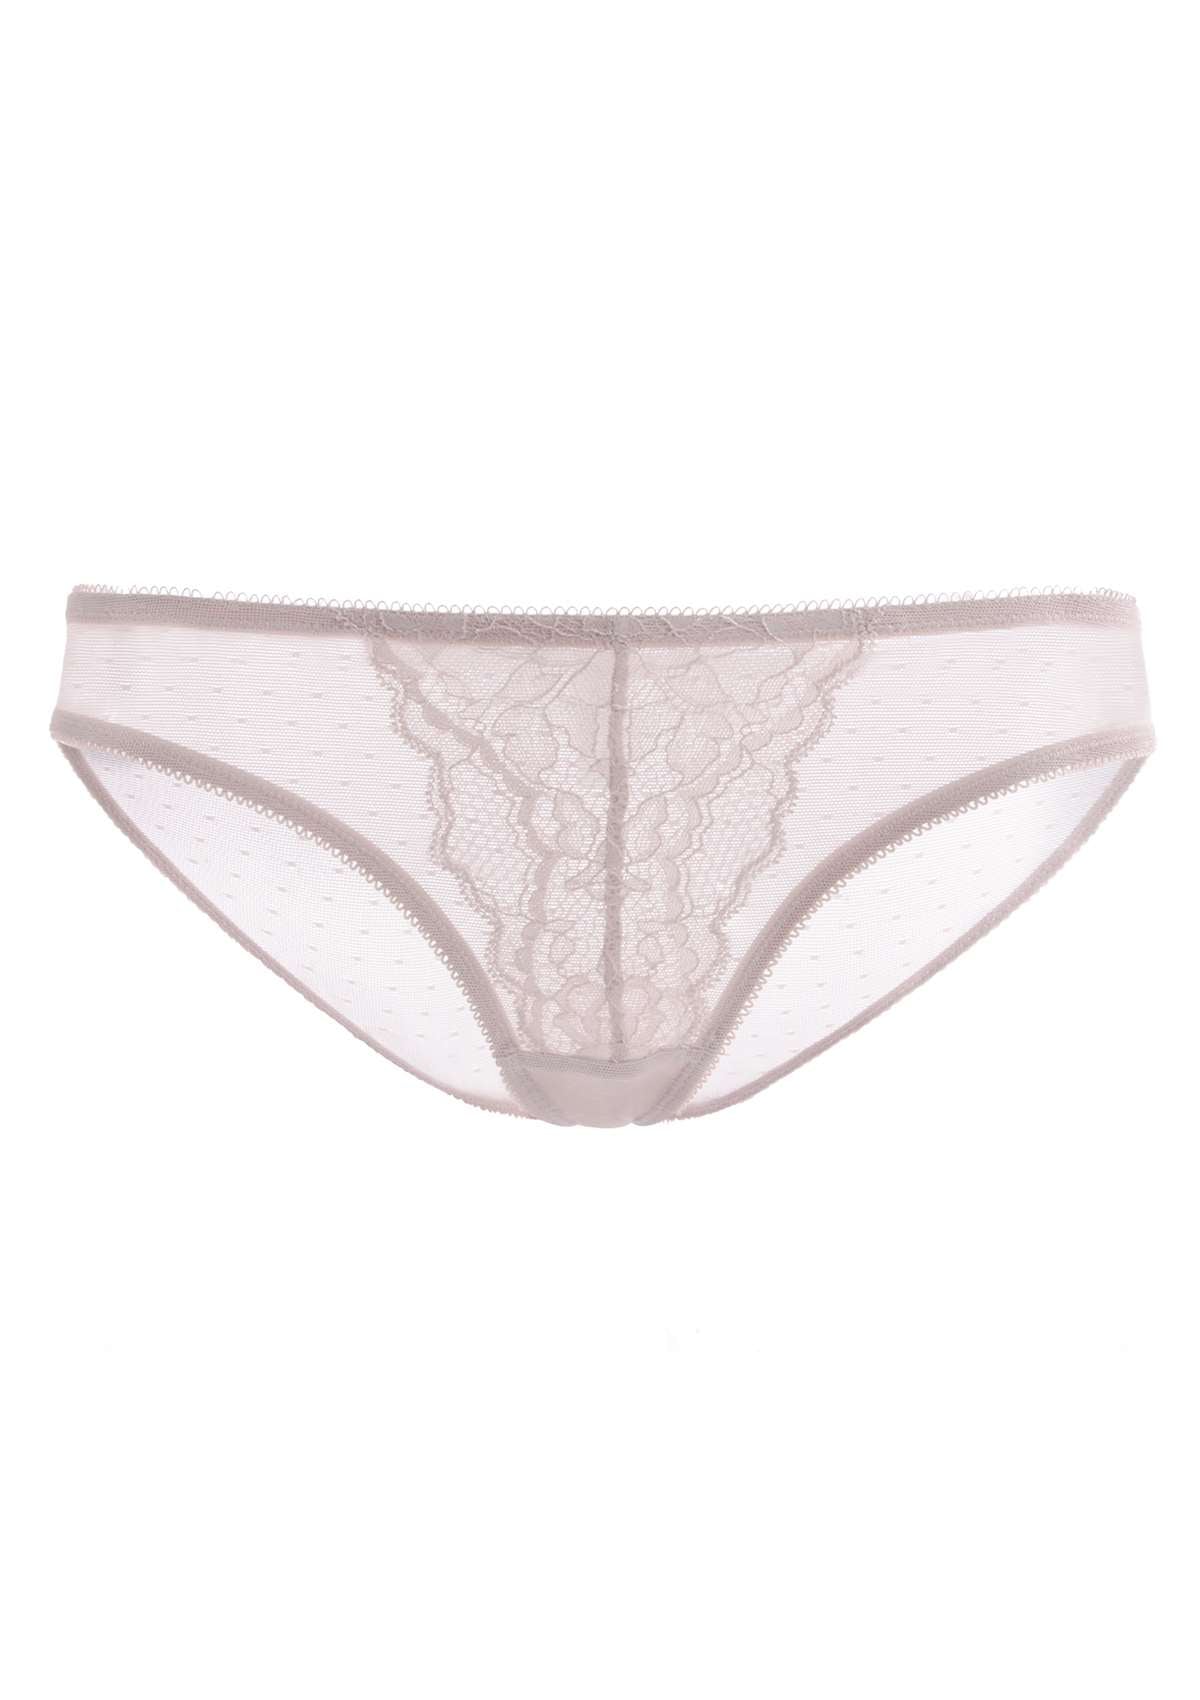 HSIA Enchante Sheer Lace Mesh Mid Rise Bikini Underwear - XXXL / Dark Pink